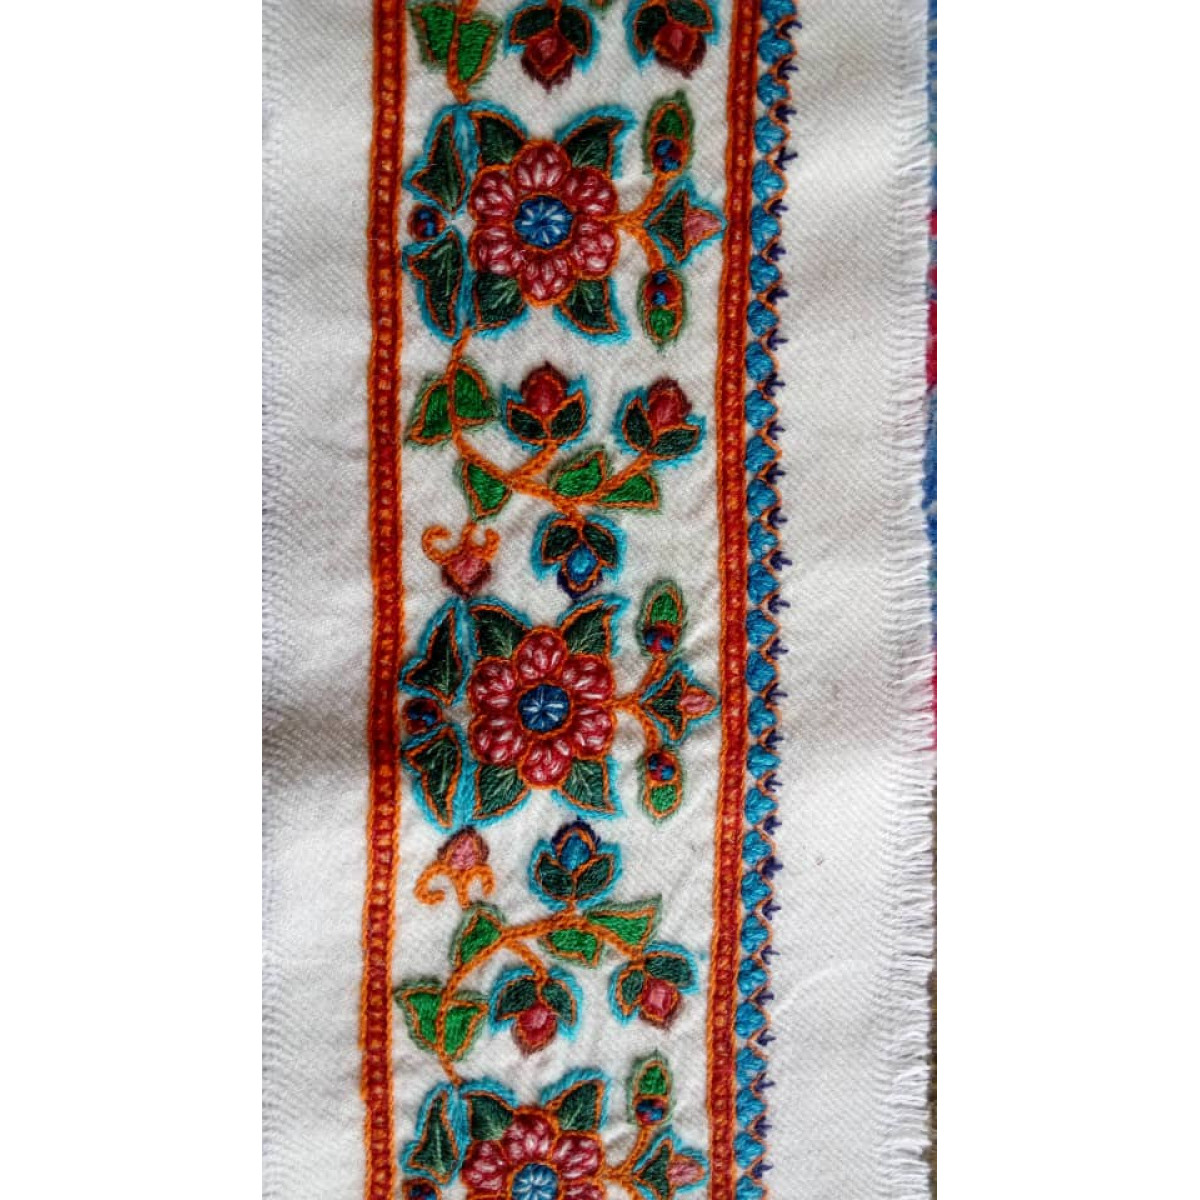 Shoulder / Messenger Handmade Leather Bag w Pateh | HPW102-Persian Handicrafts